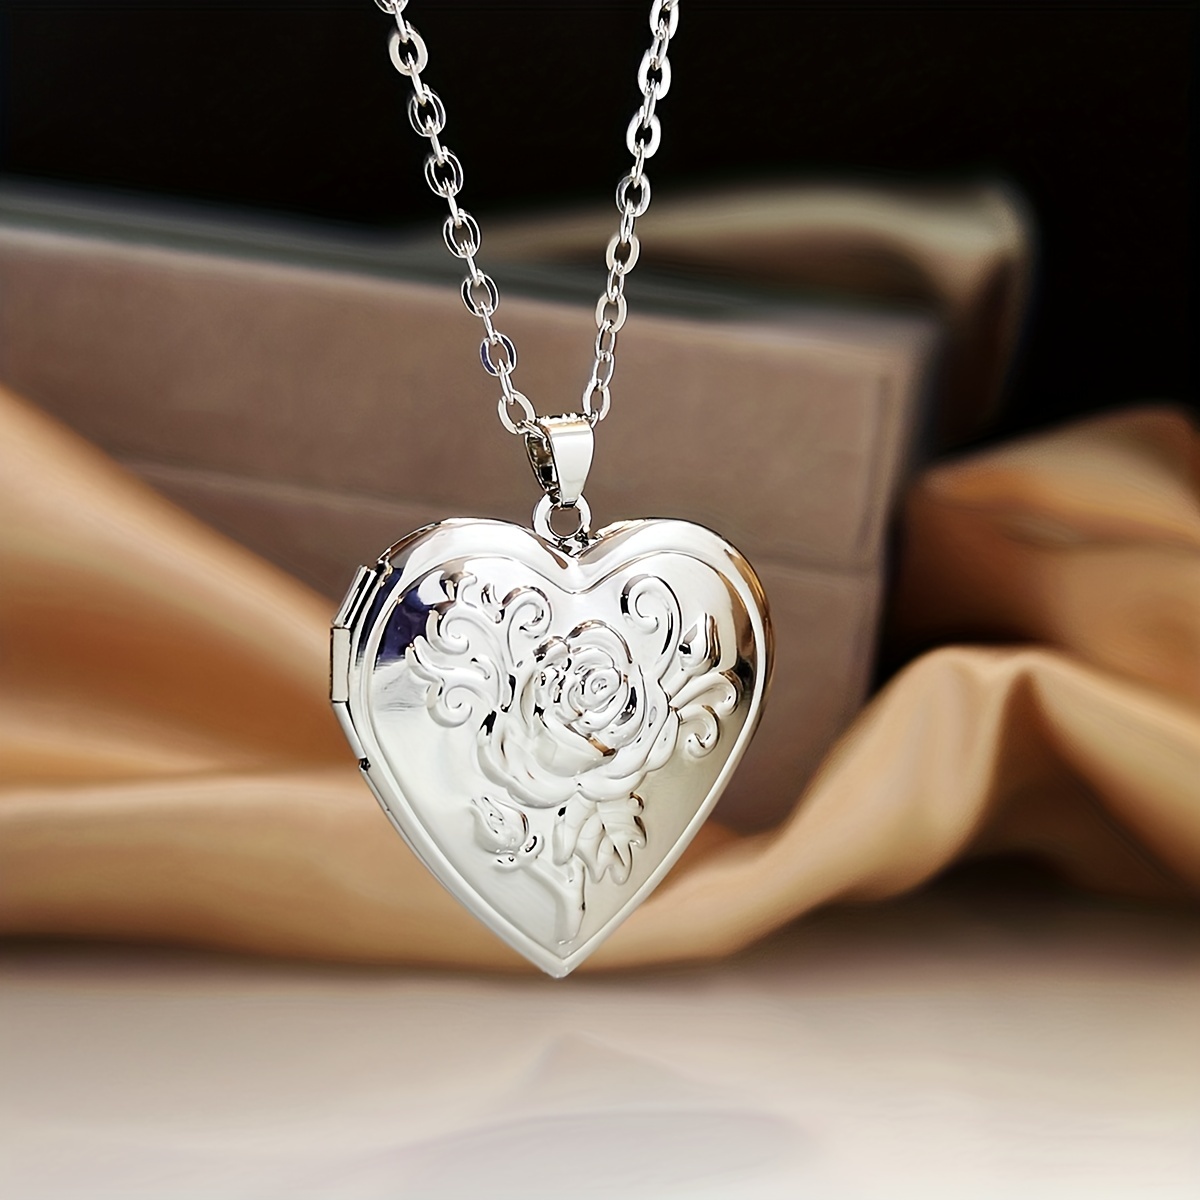 Vintage Heart Locket Necklace By Jamie London | notonthehighstreet.com